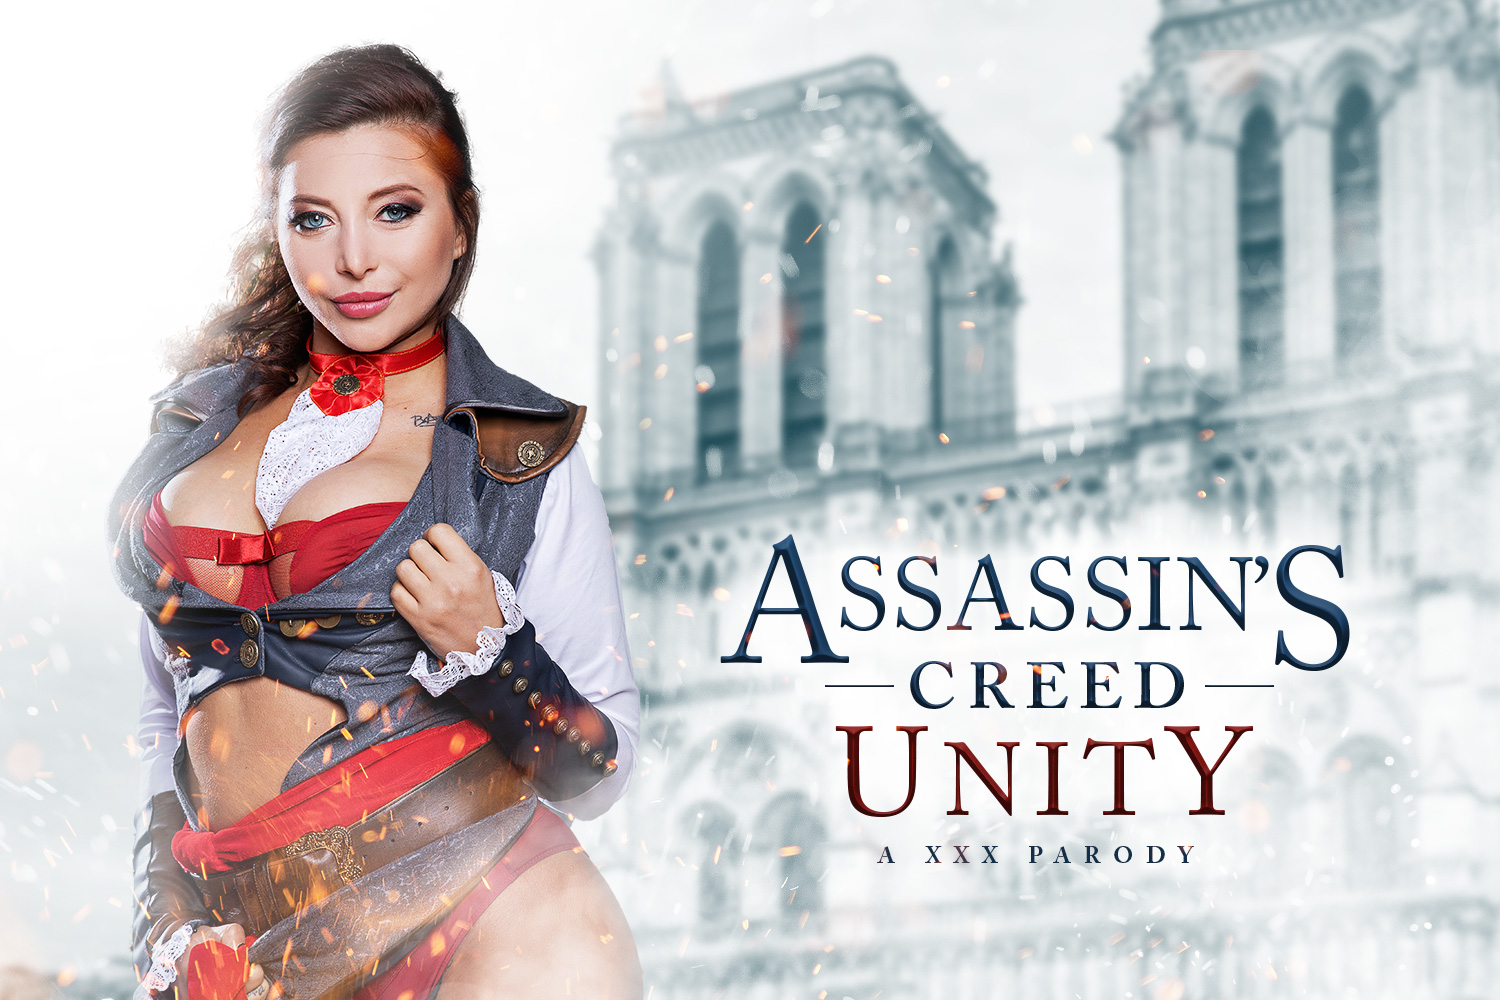 Assassins creed unity vrcosplayx